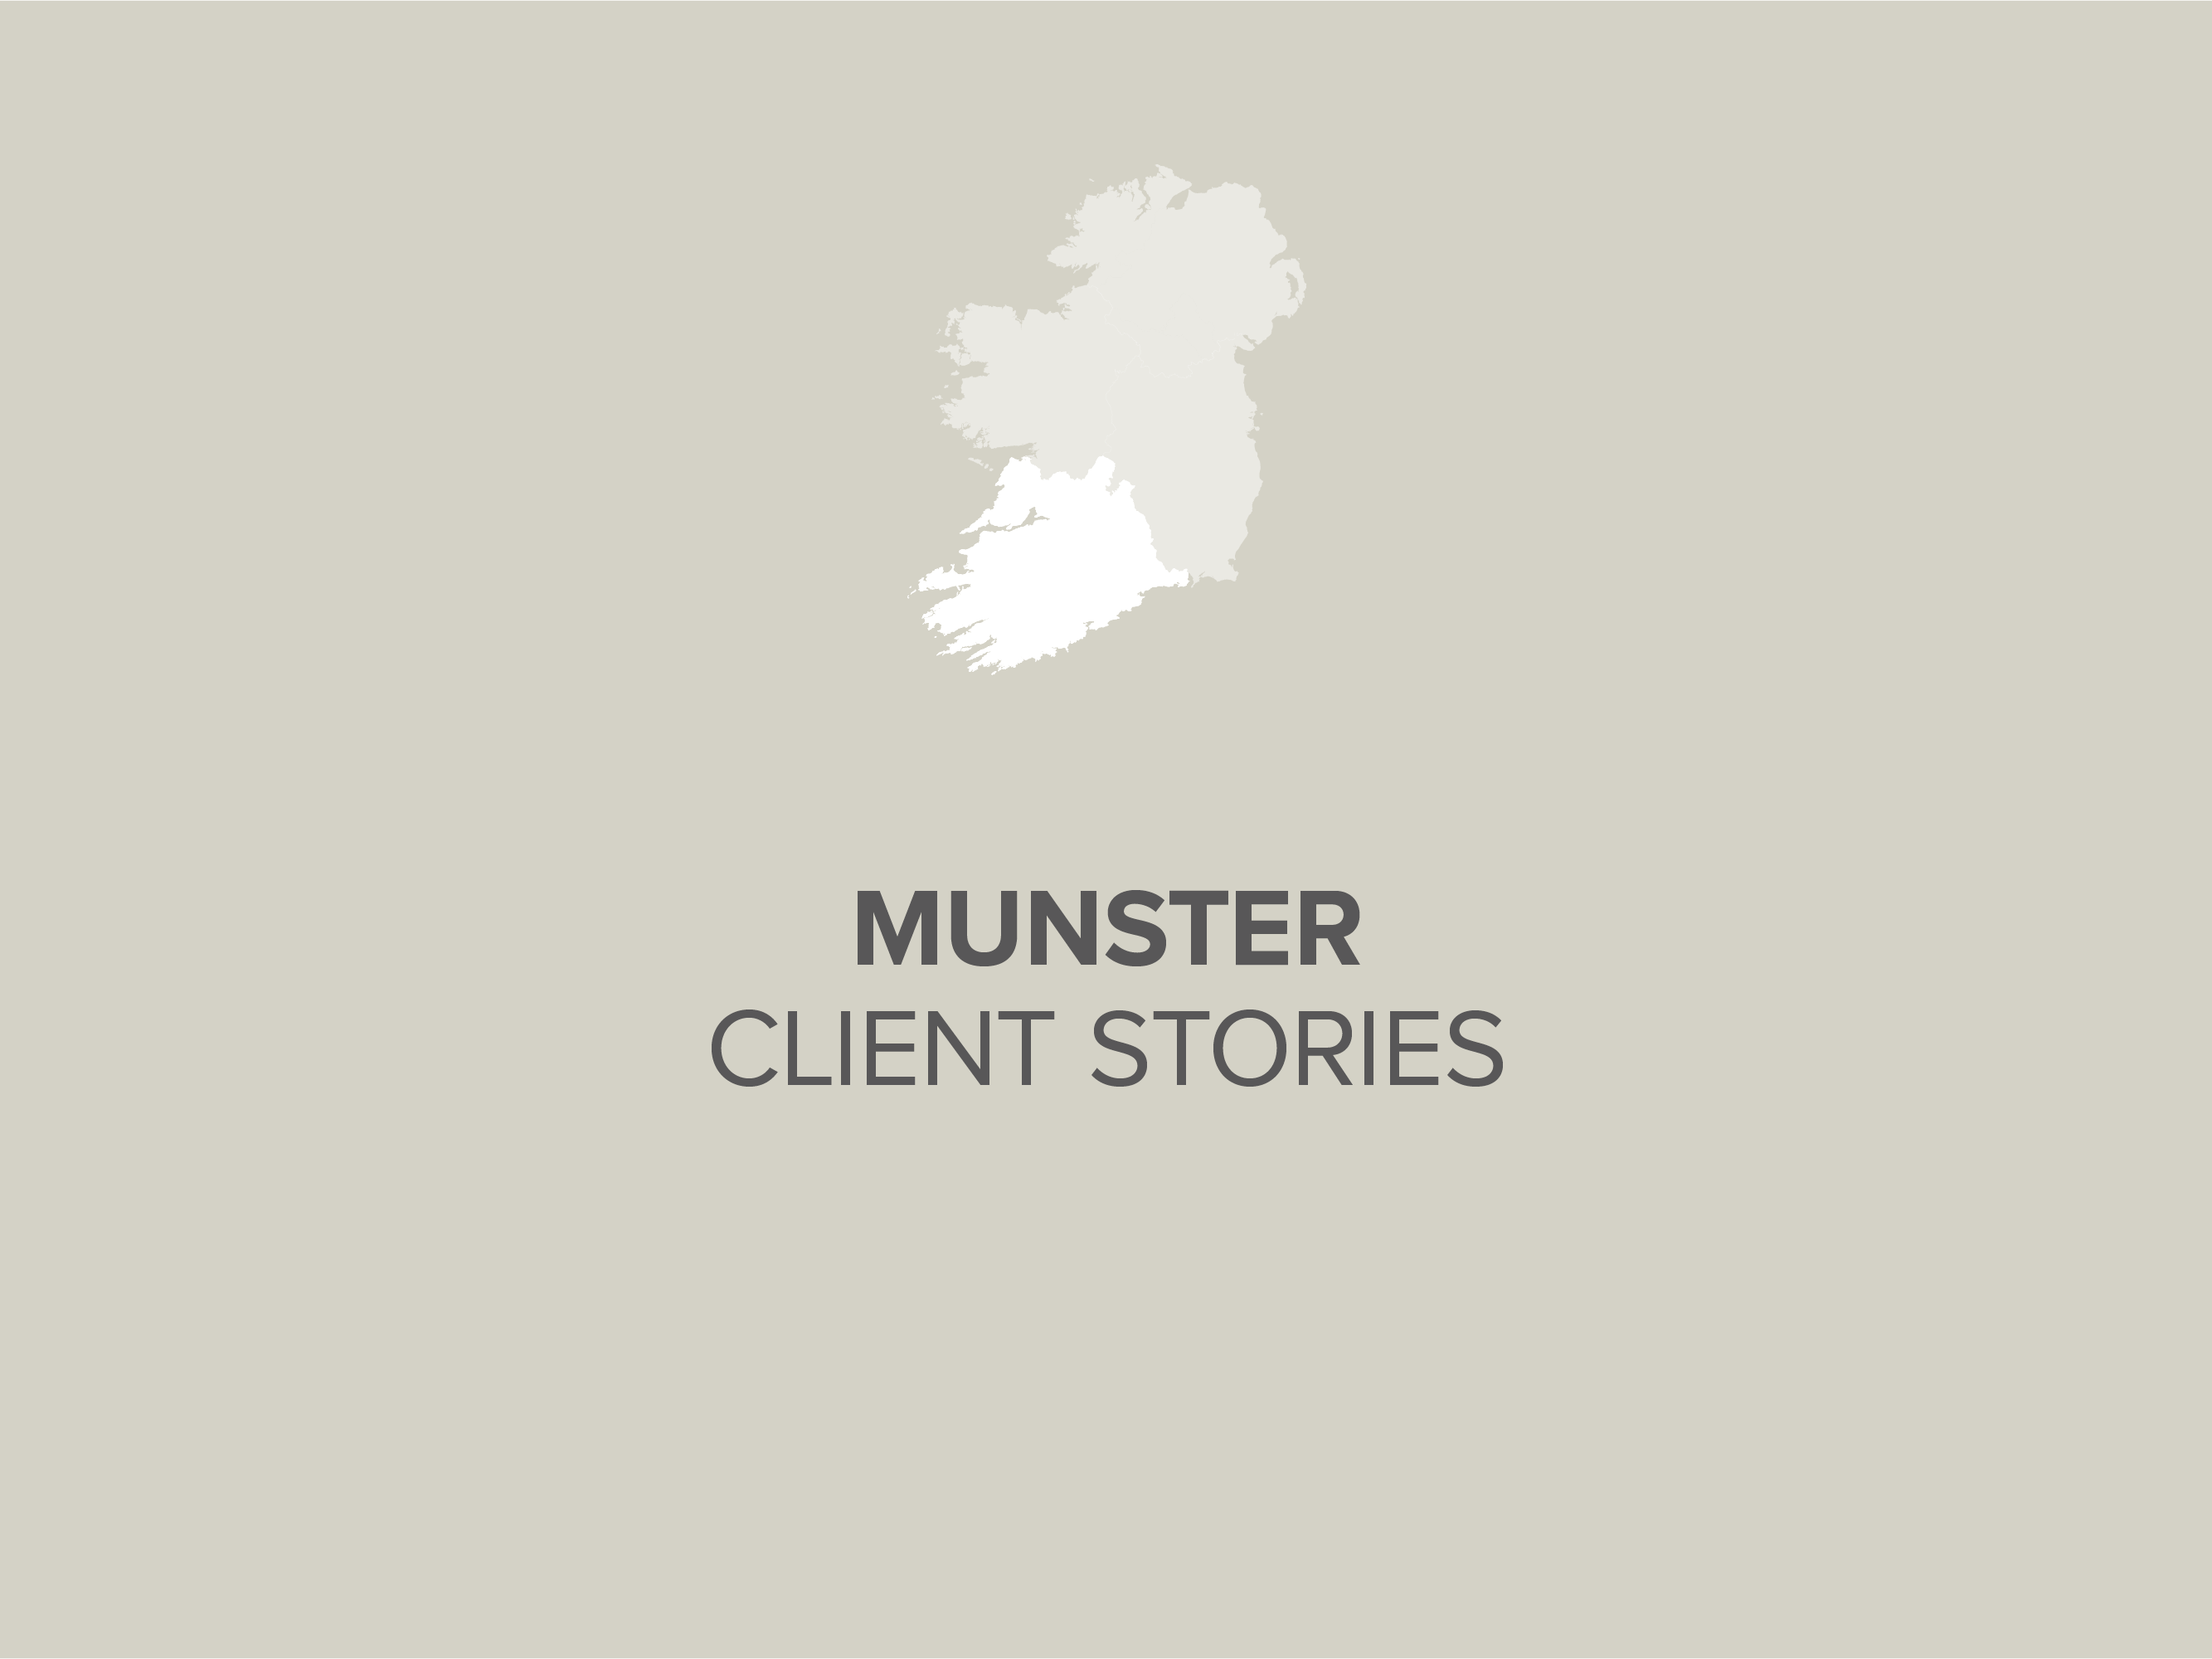 Munster Client Stories